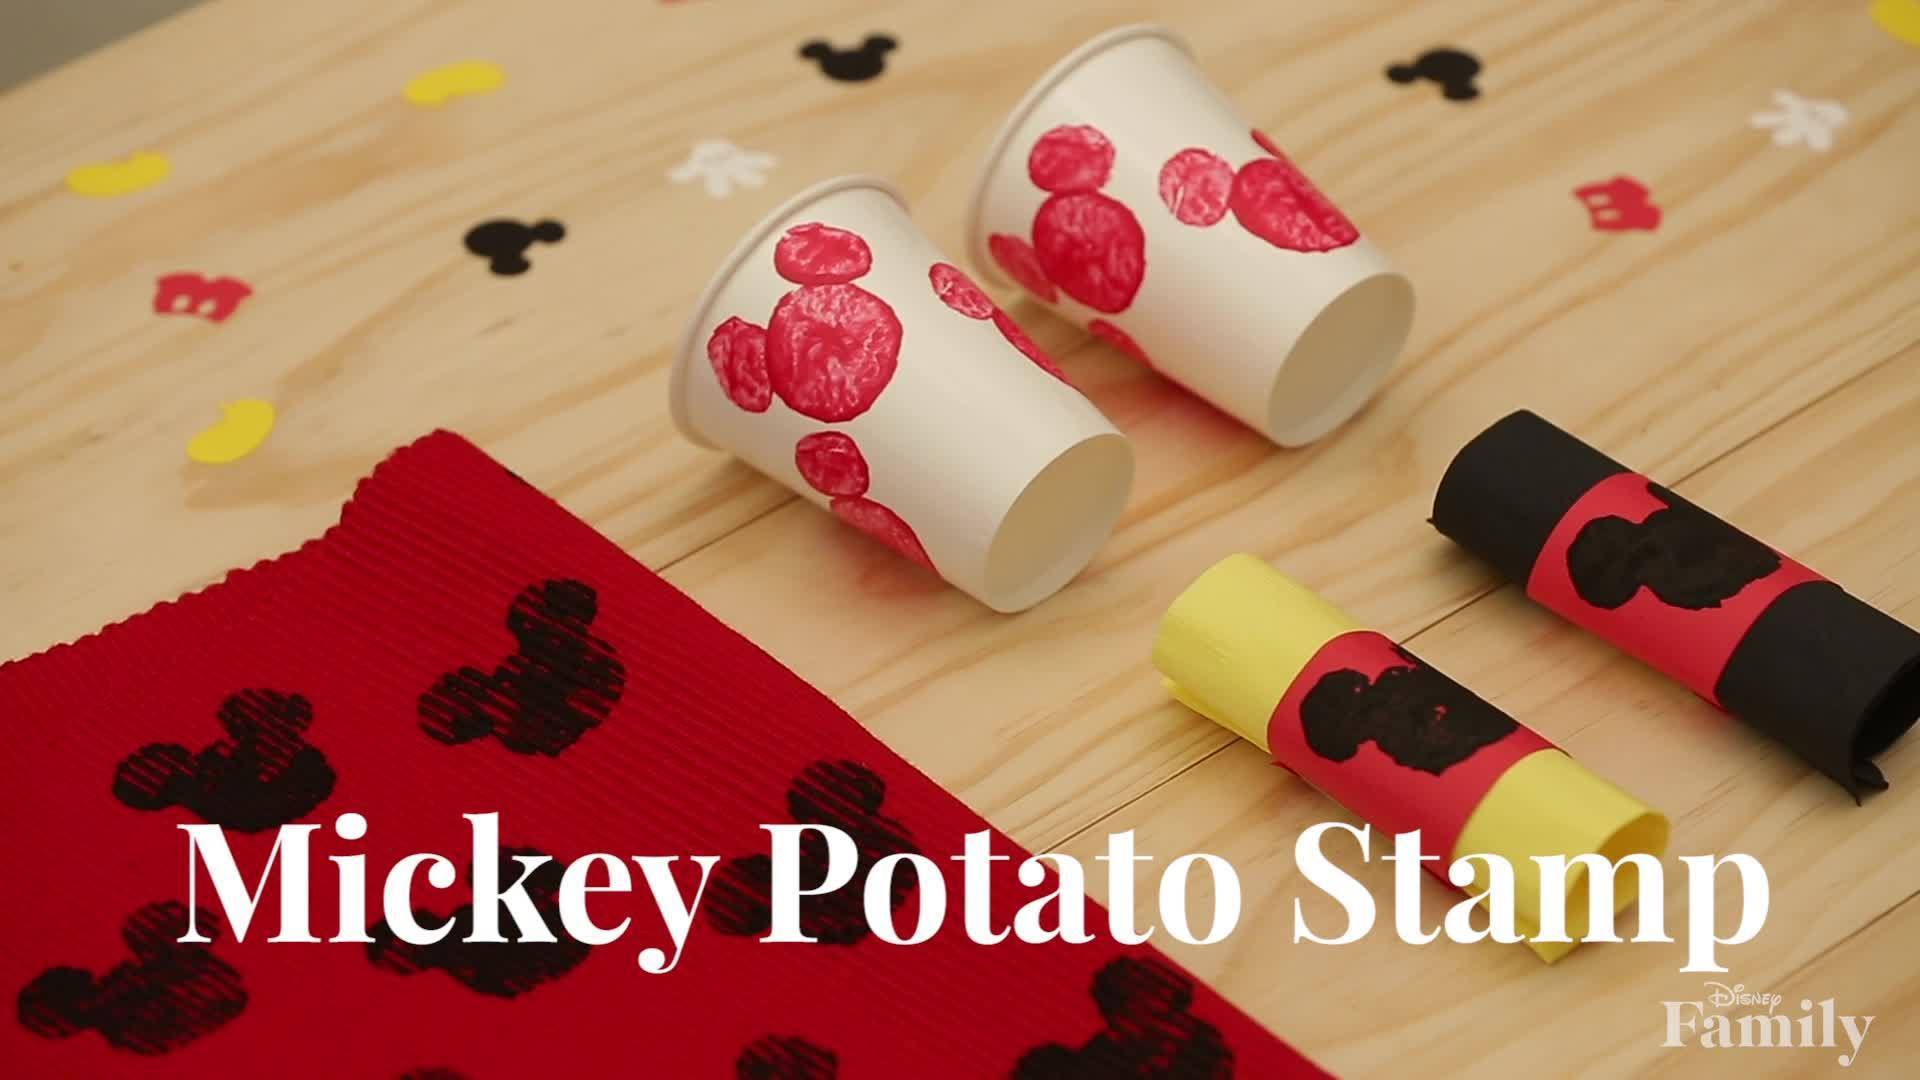 Disney Family: Mickey Potato Stamp DIY